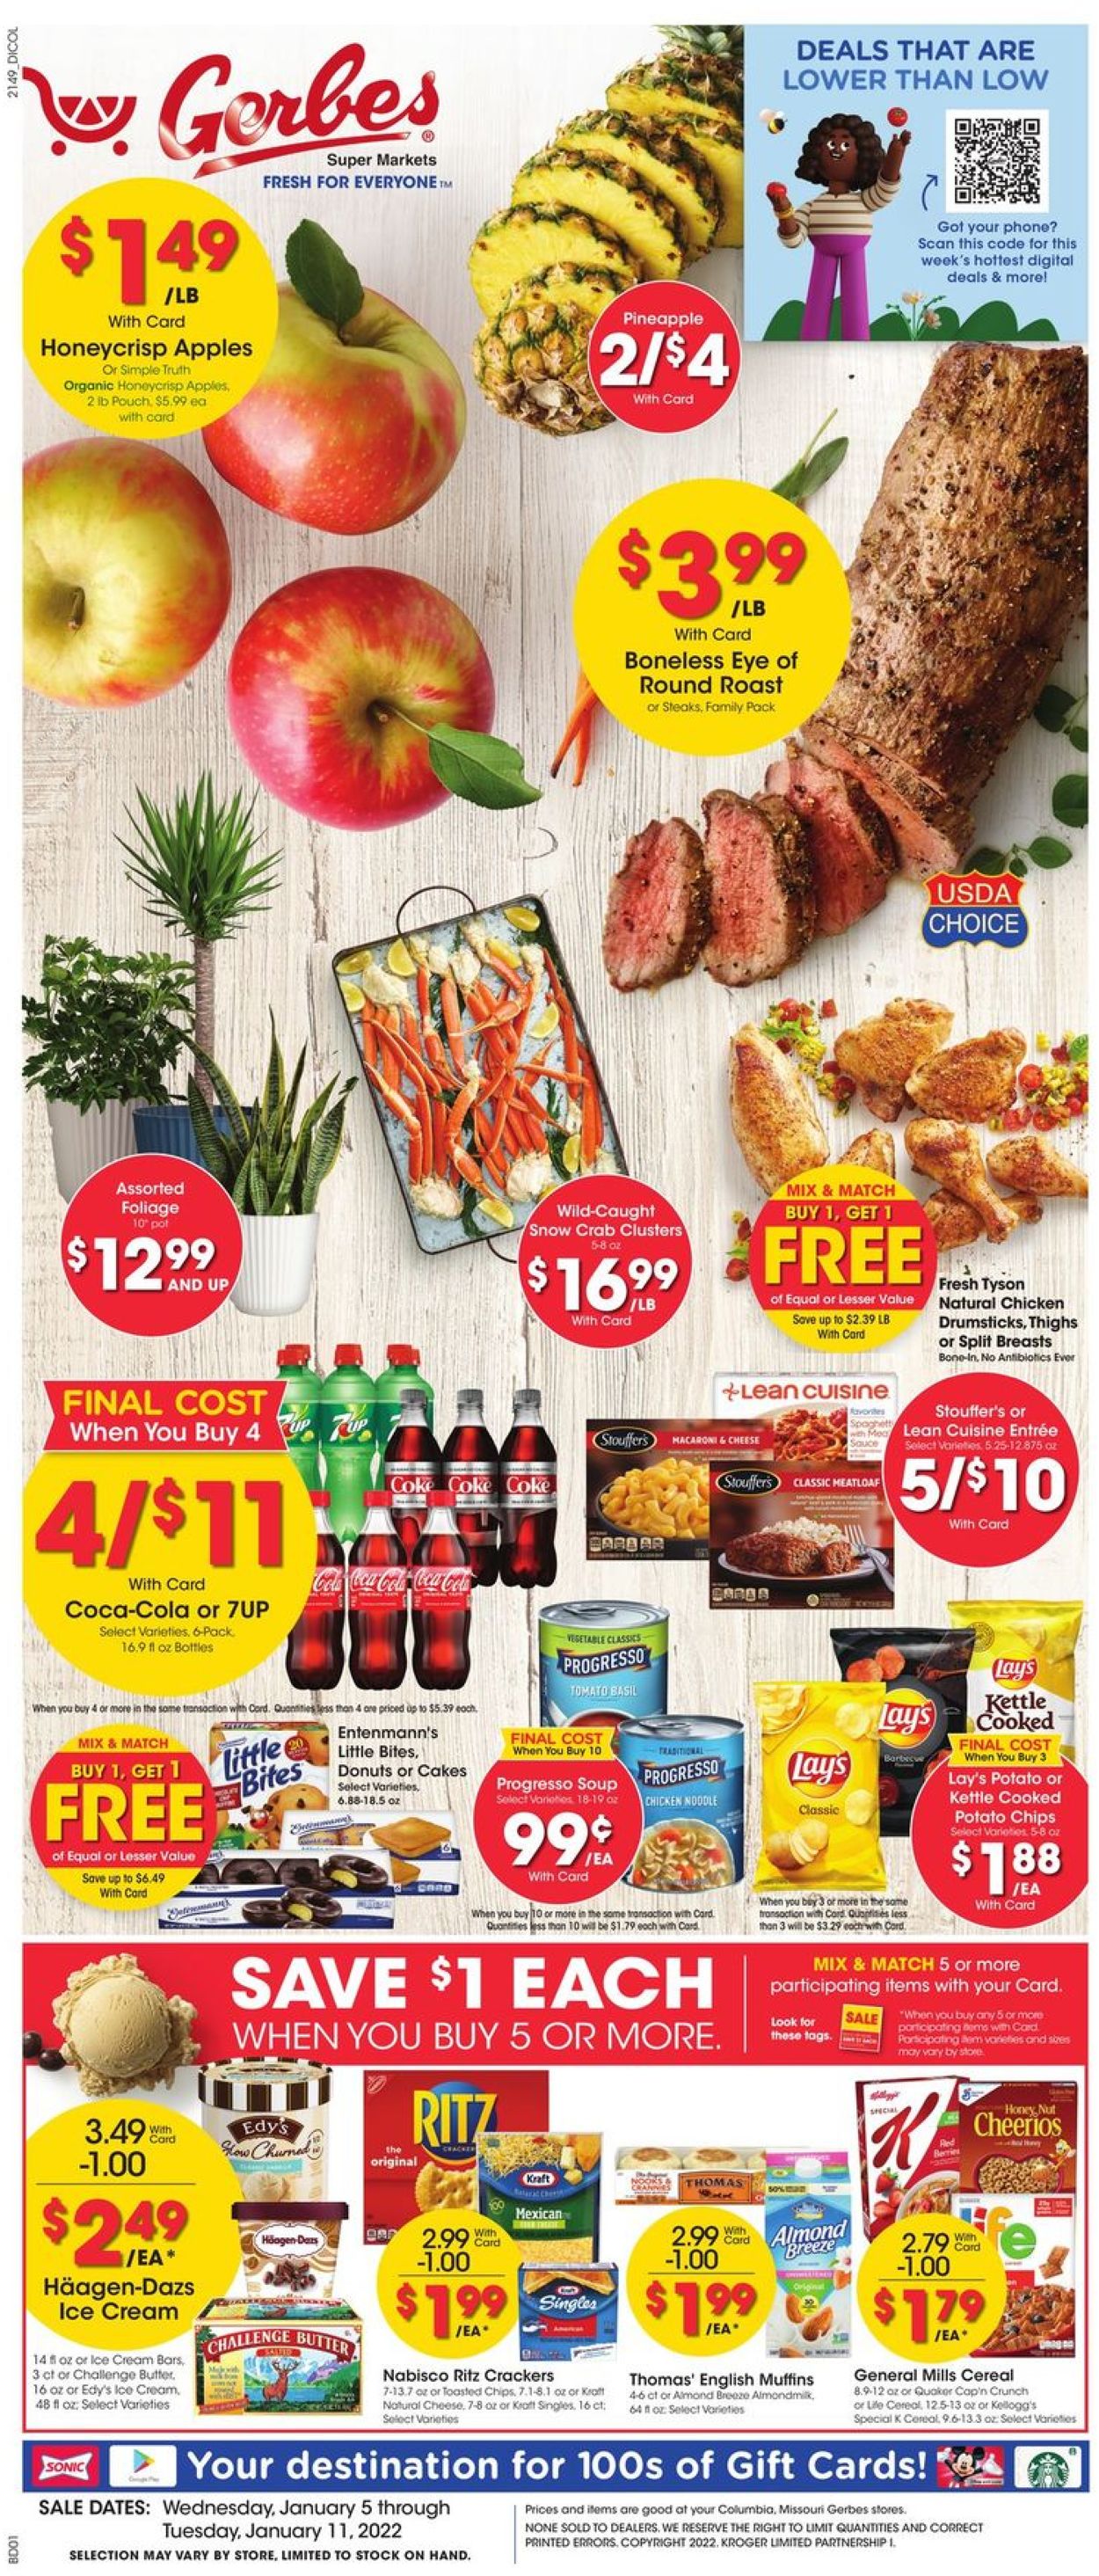 Gerbes Super Markets Ad from 01/05/2022